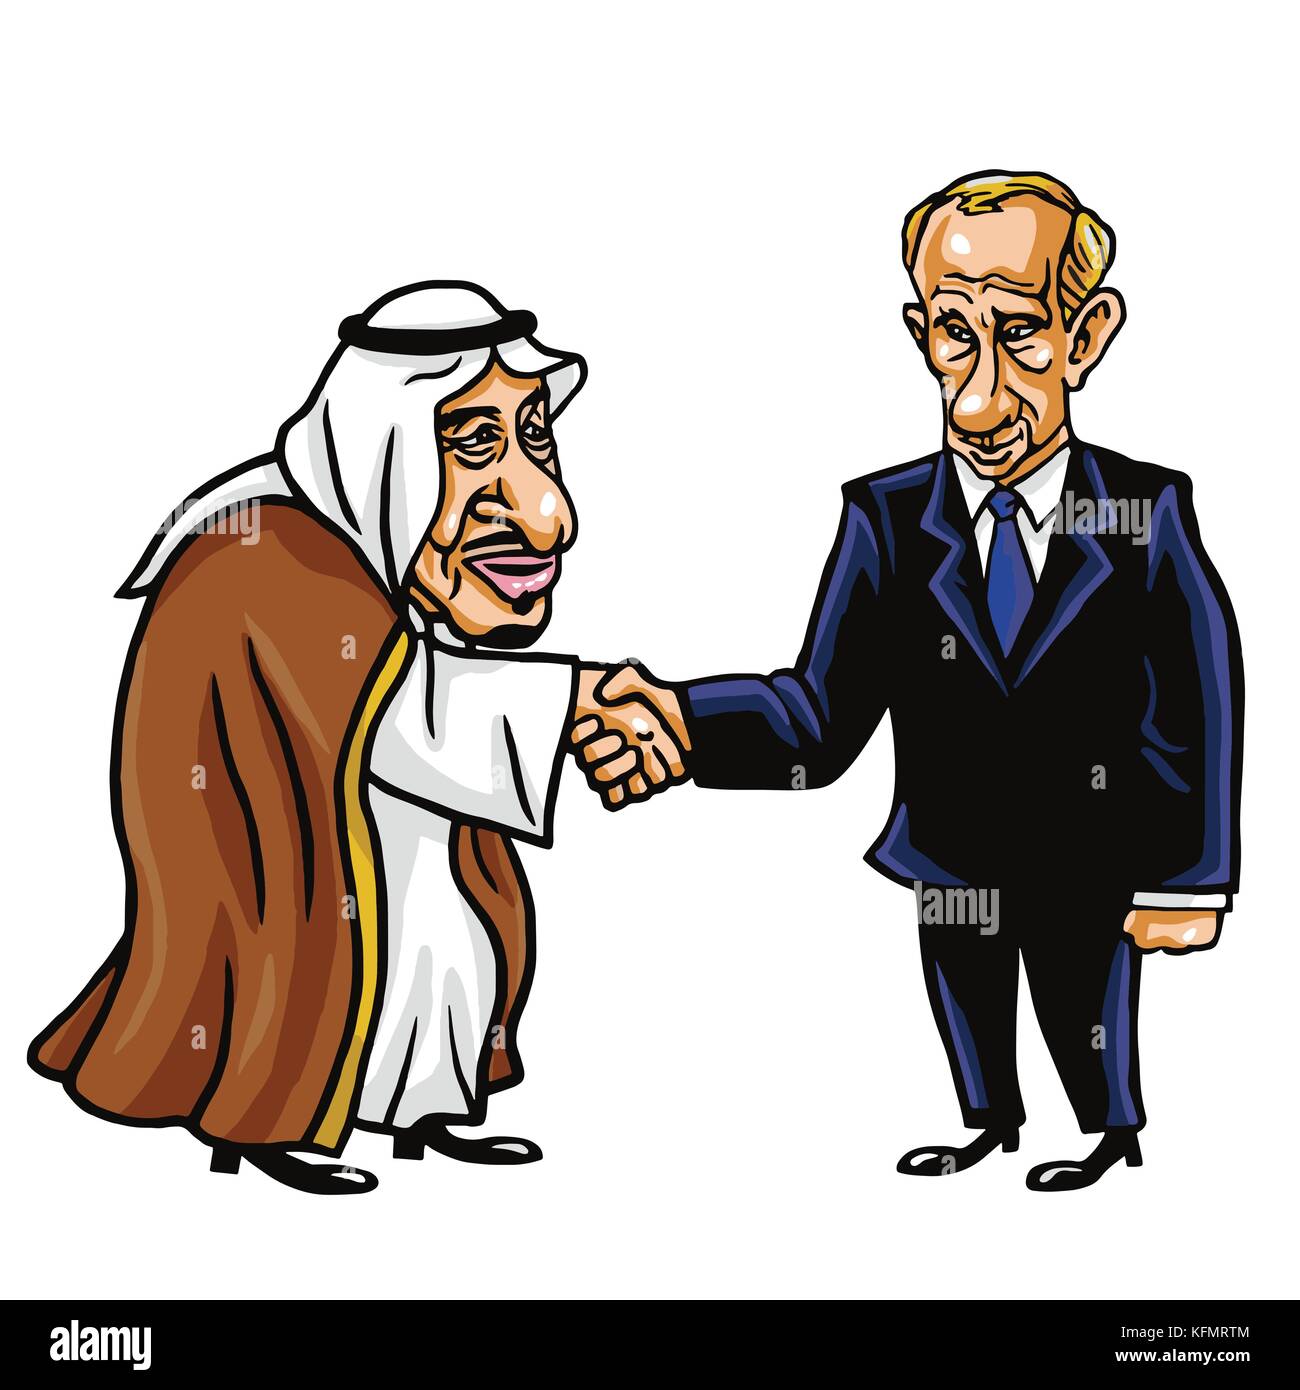 Moskau, 31. Oktober 2017: King Salman und Wladimir Putin die Hände schütteln. Vektor Cartoon Illustration. Stock Vektor